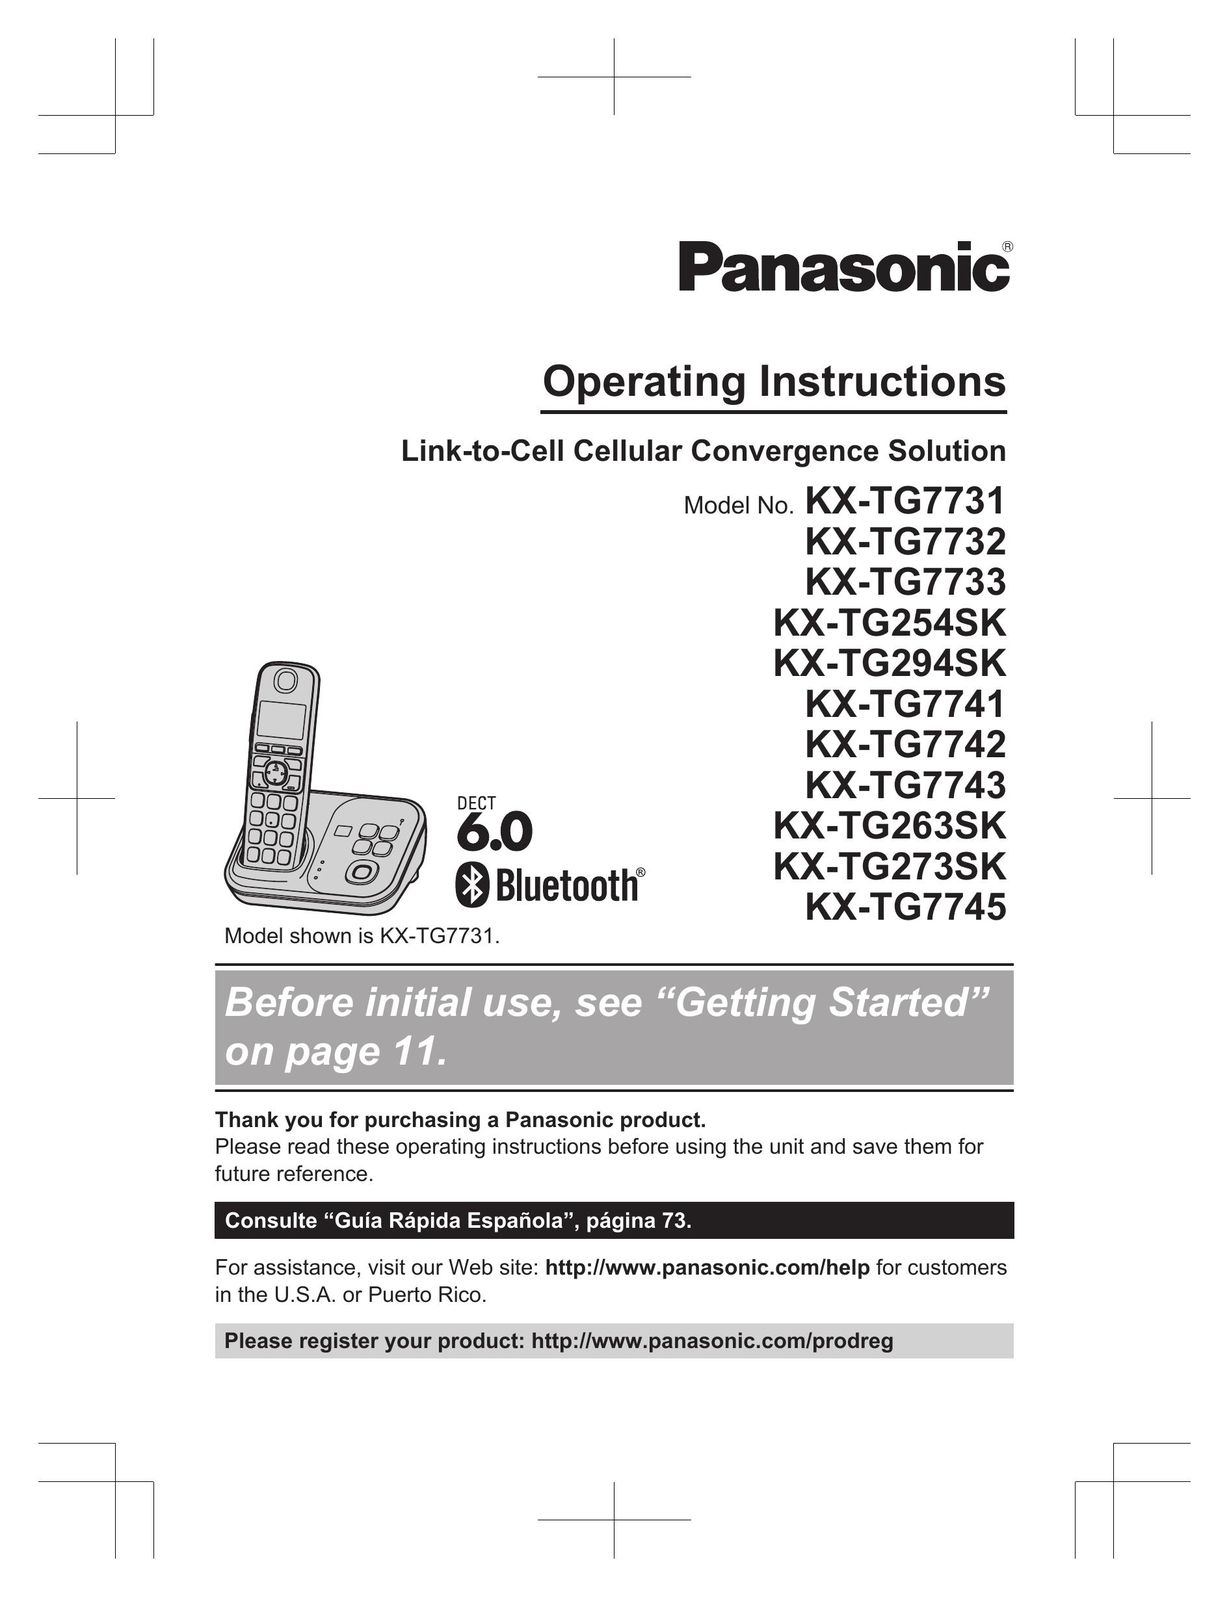 Panasonic KX-TG7742 Carrying Case User Manual